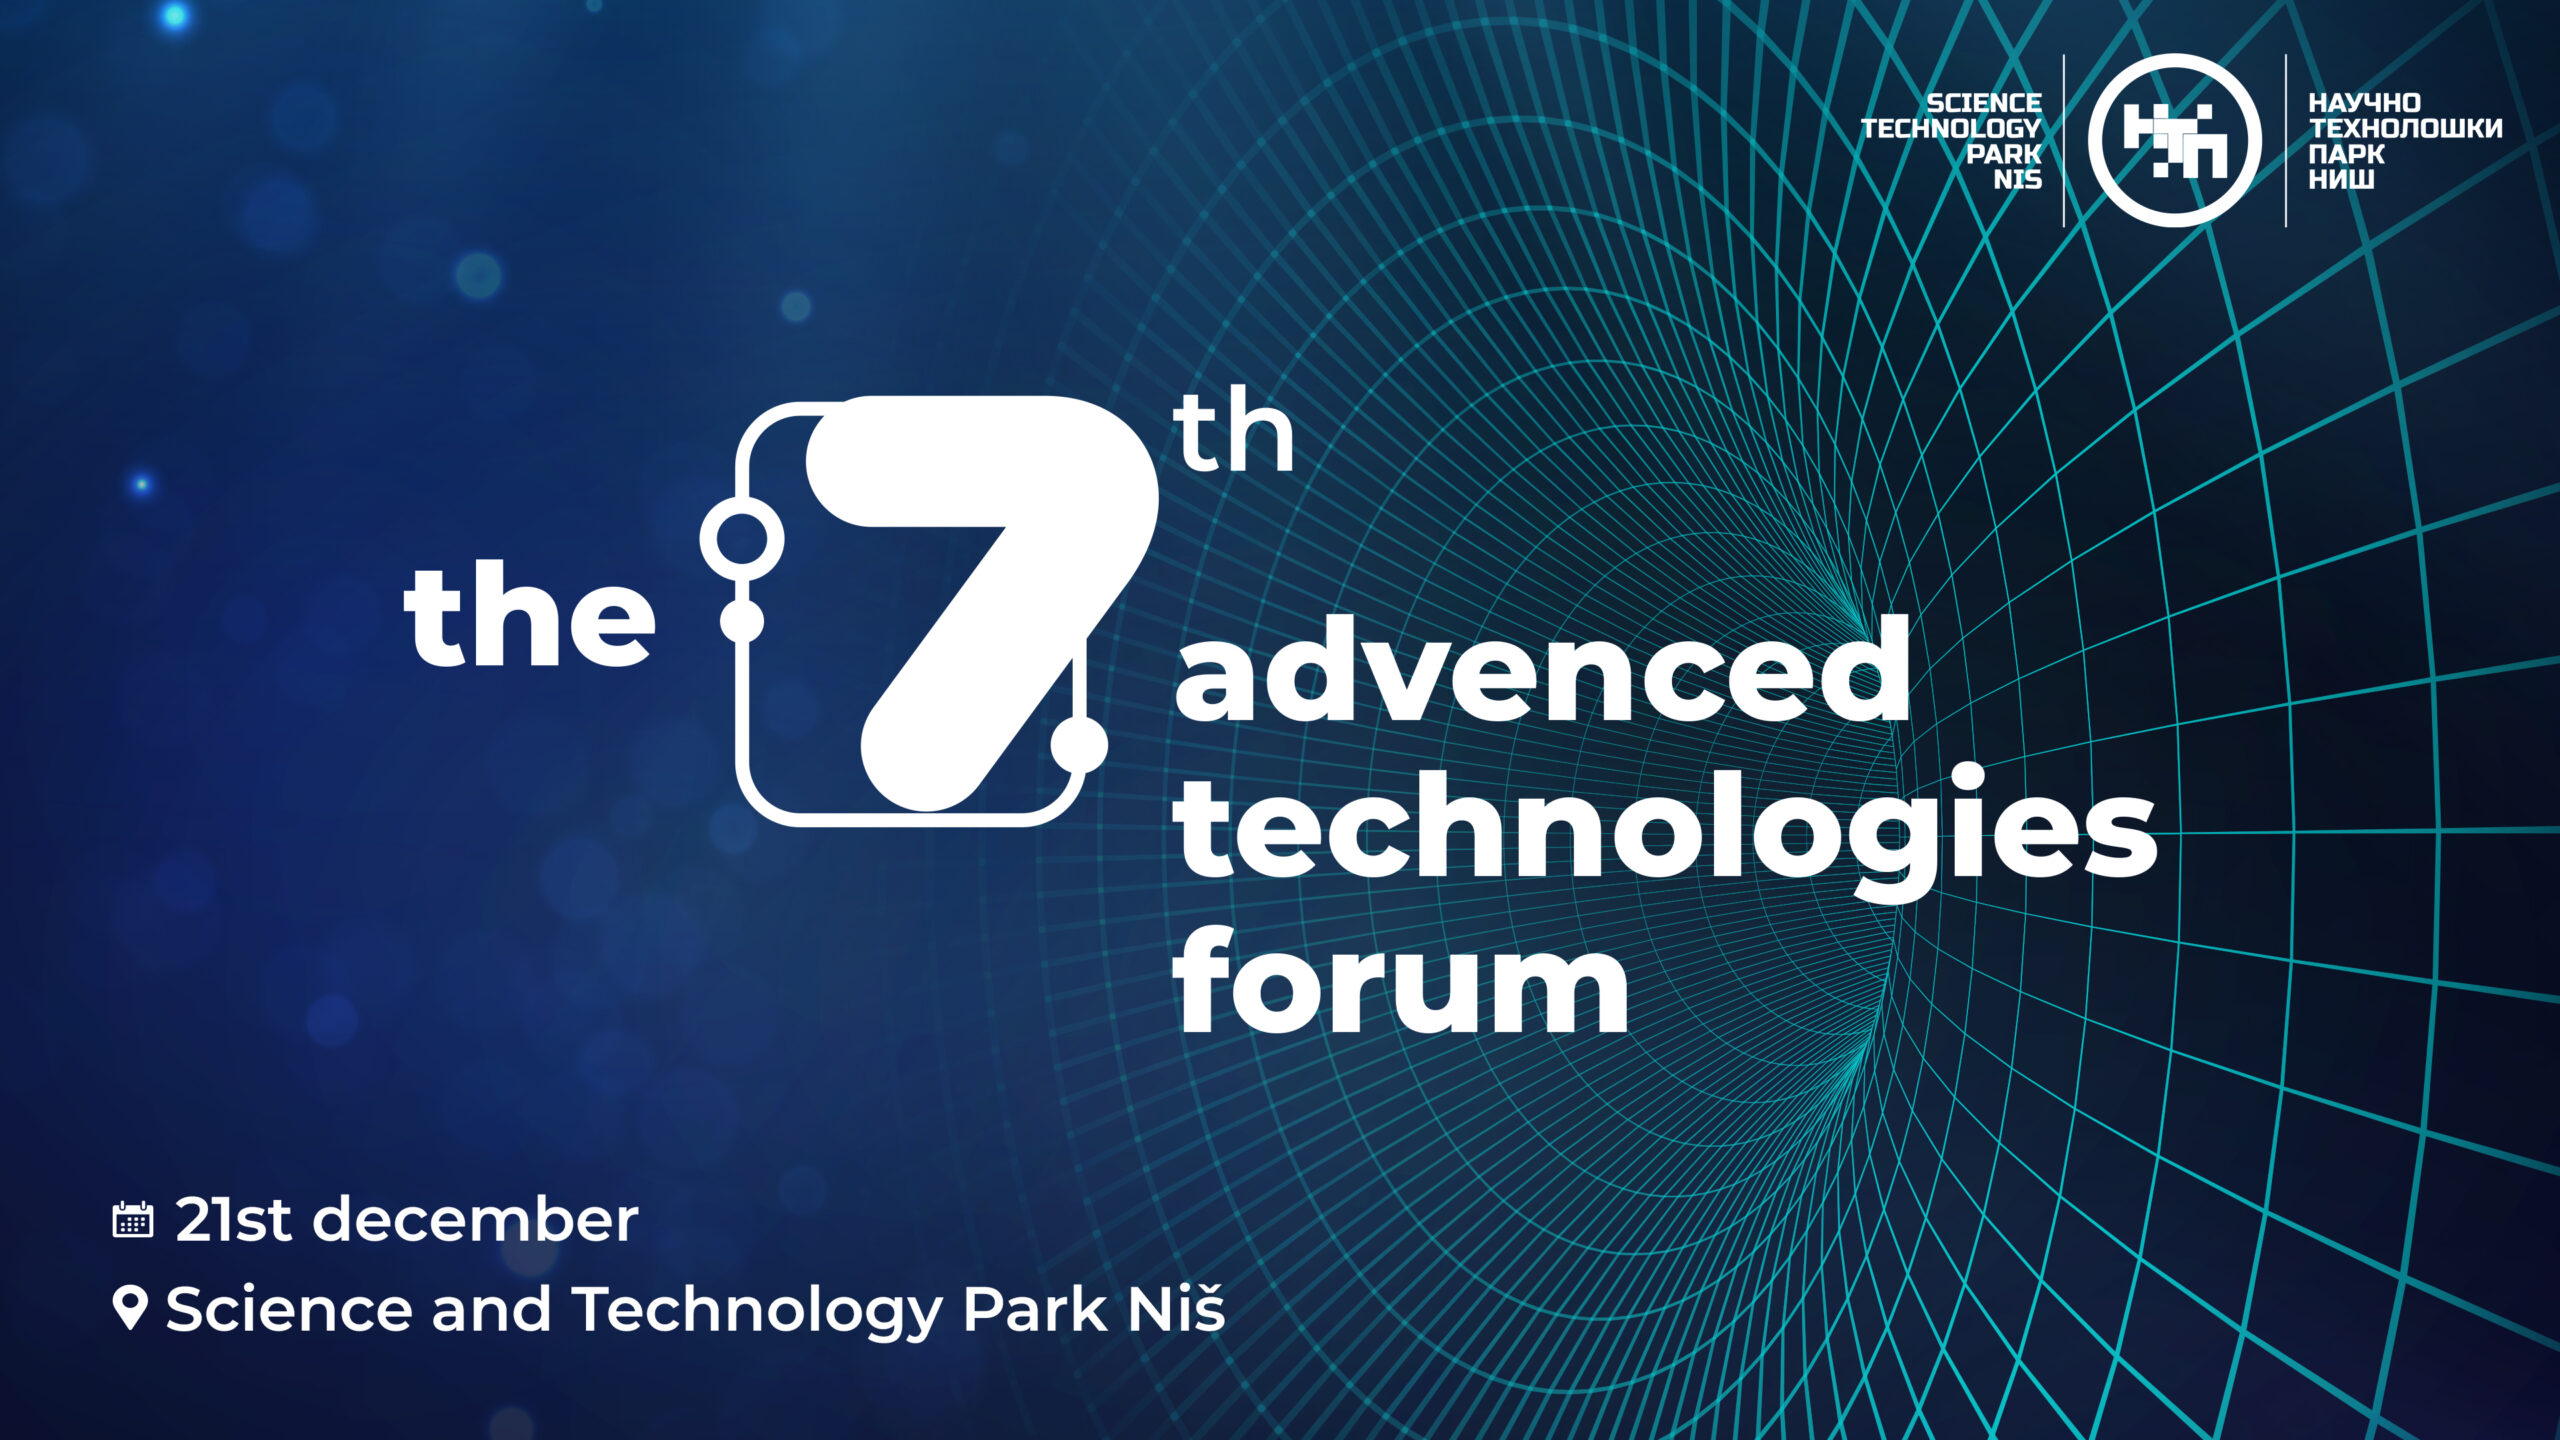 The 7th Advanced Technologies Forum